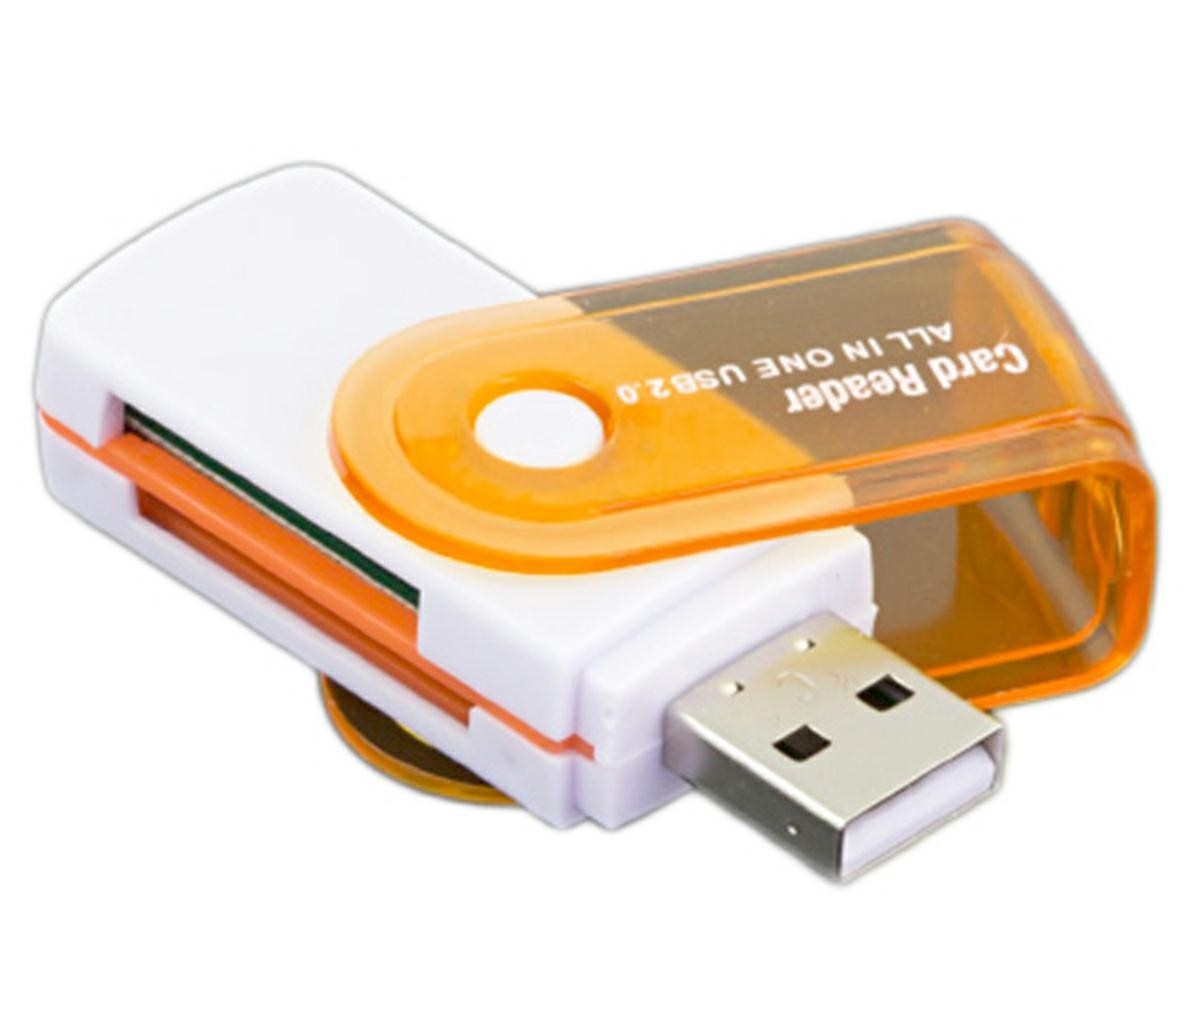 Cititor carduri, usb 2.0, 60 mb/s, alb portocaliu